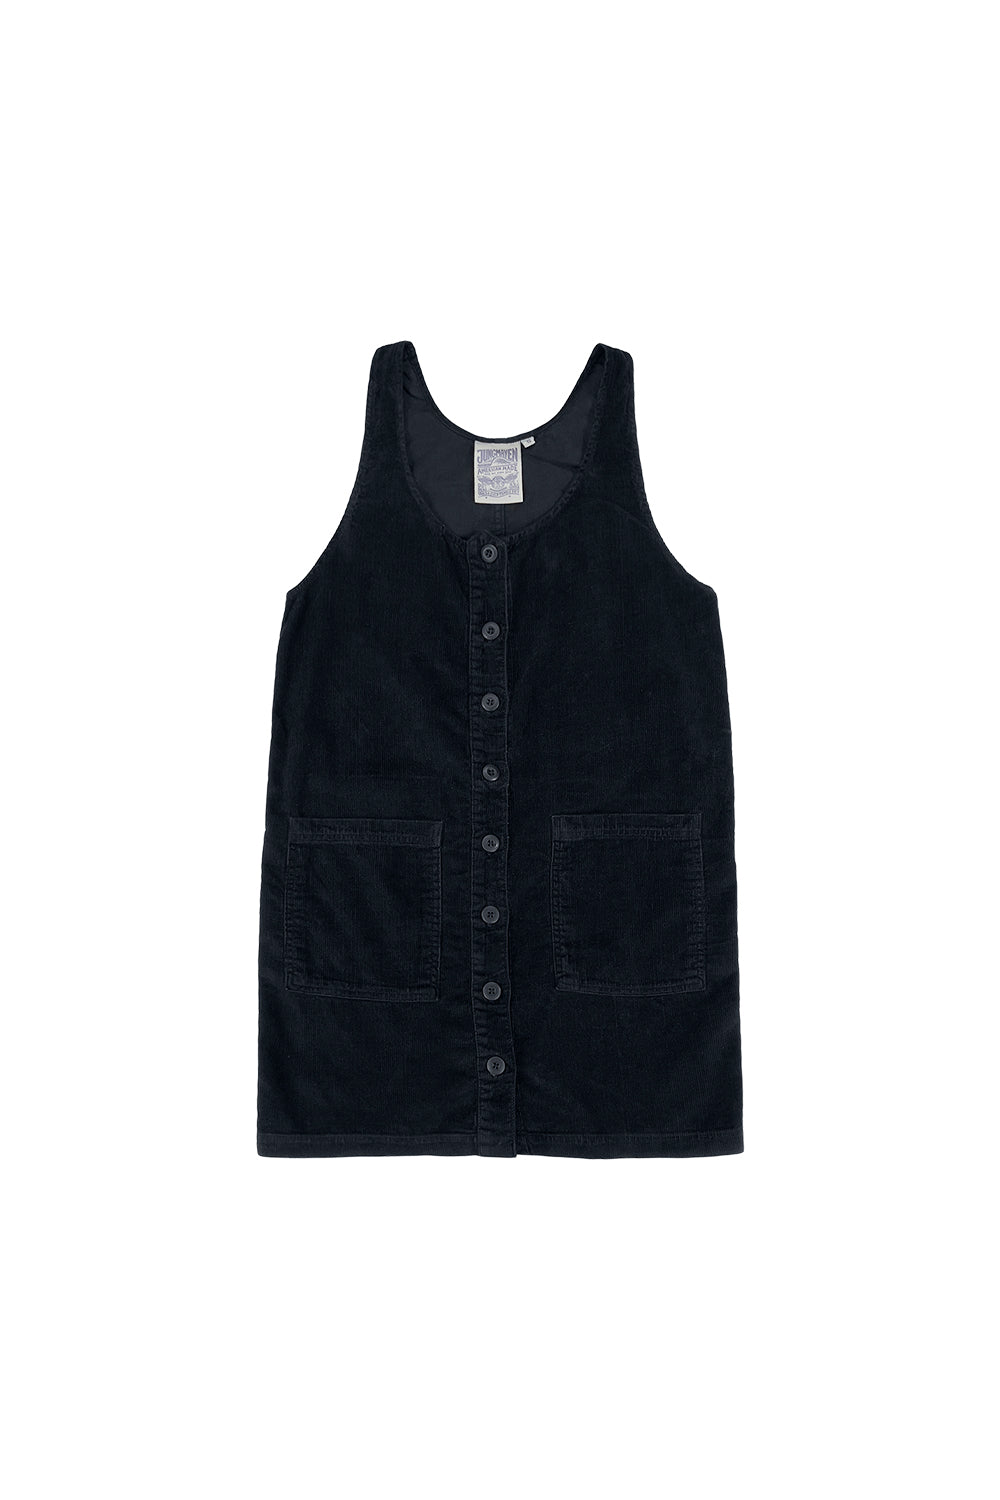 Corduroy Jumper Dress | Jungmaven Hemp Clothing & Accessories / Color: Black